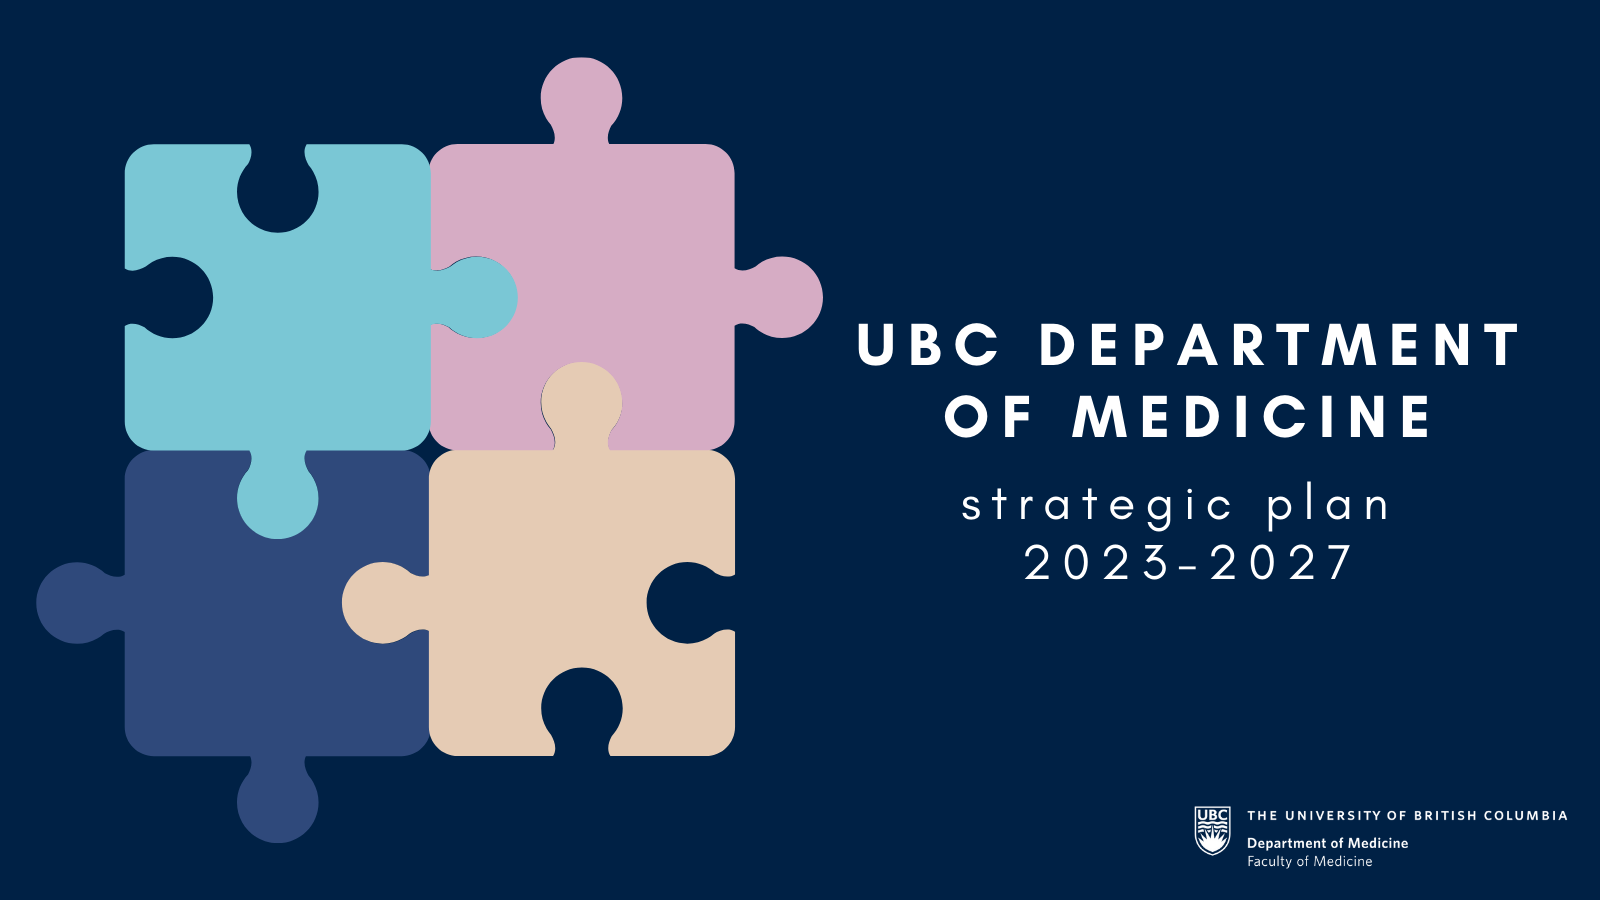 UBC Department of Medicine launches Strategic Planning Process